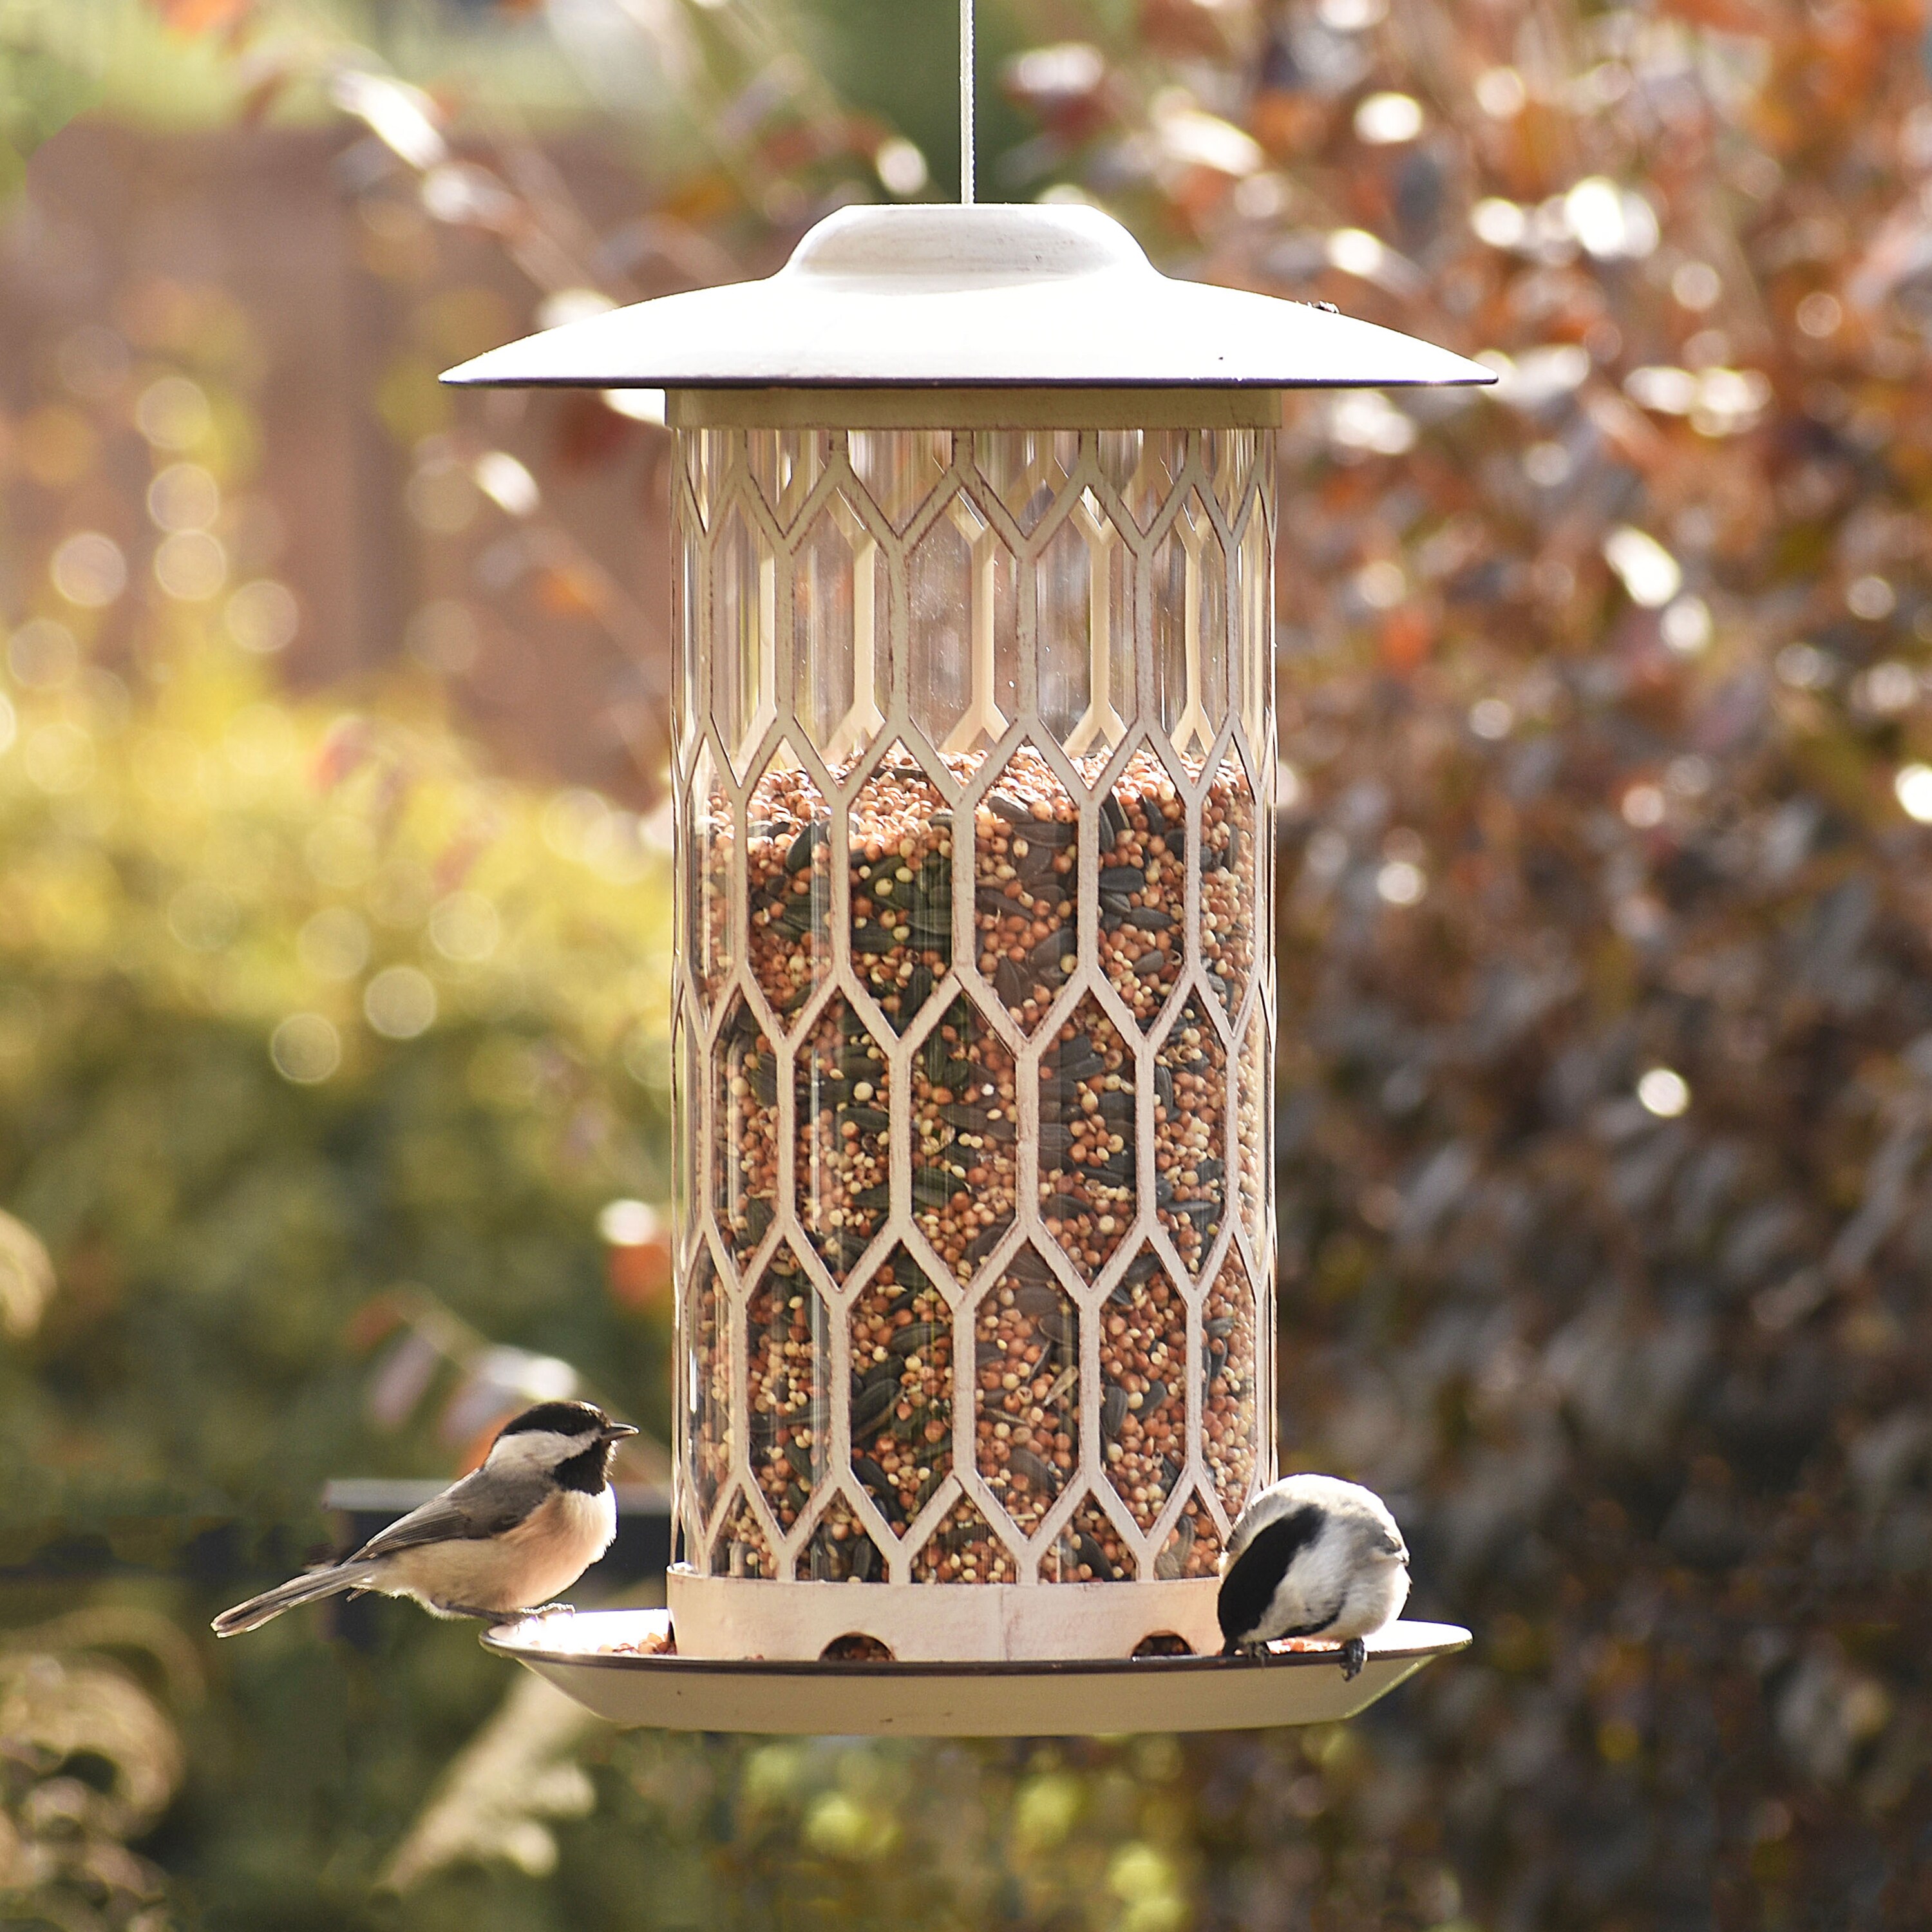 Rustic Metal Hanging Spigot Bird Feeder with Seed Tray Outdoor Garden Decor New 